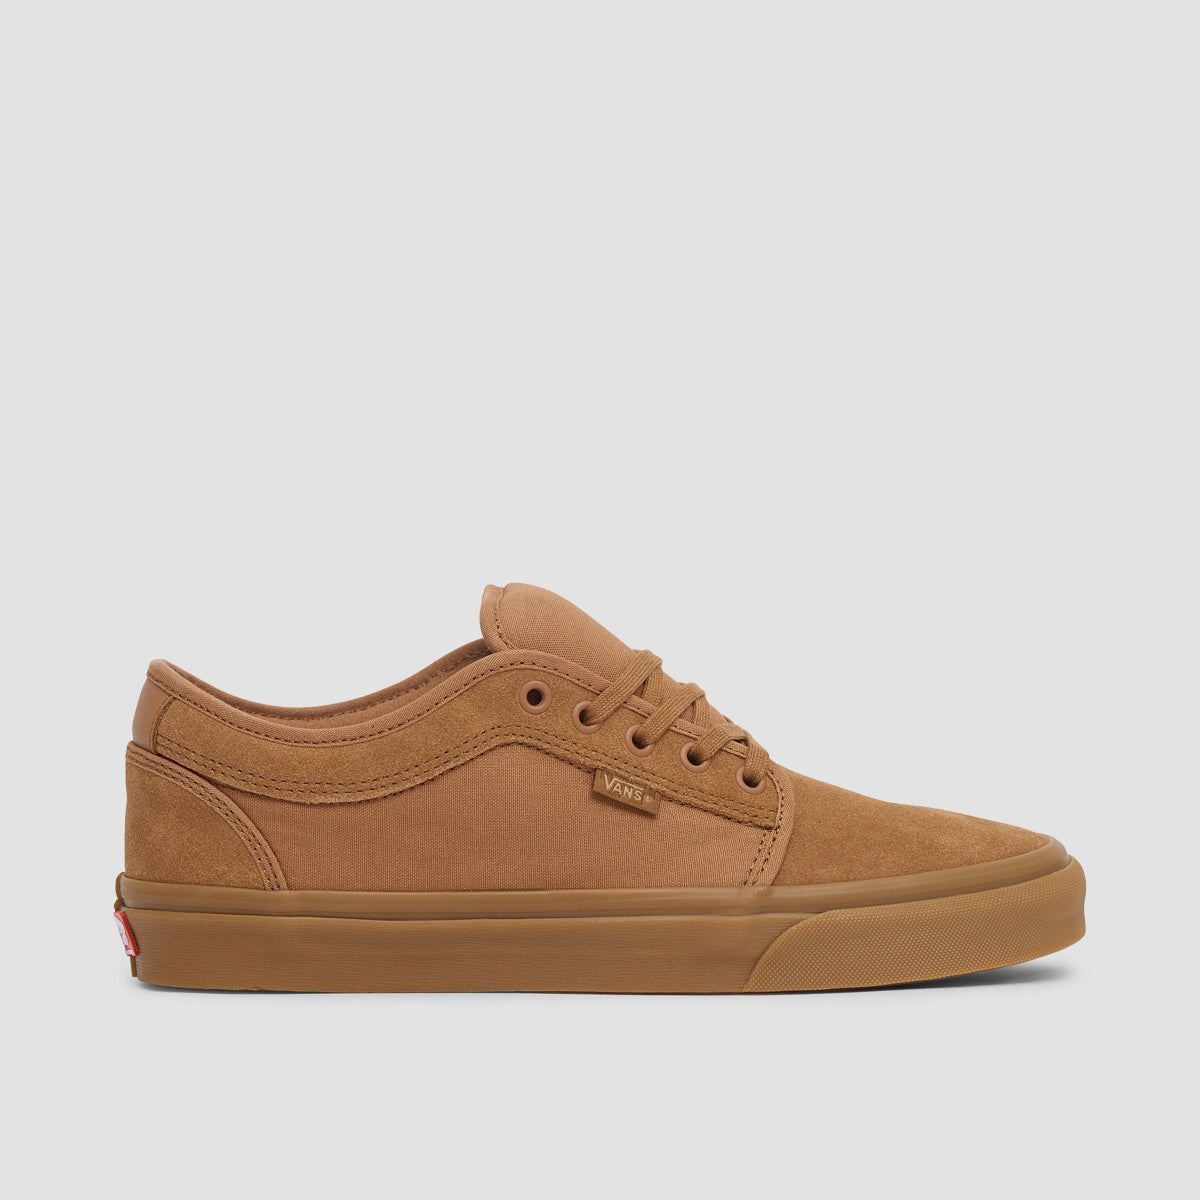 Vans Skate Chukka Low Shoes - Light Brown/Gum